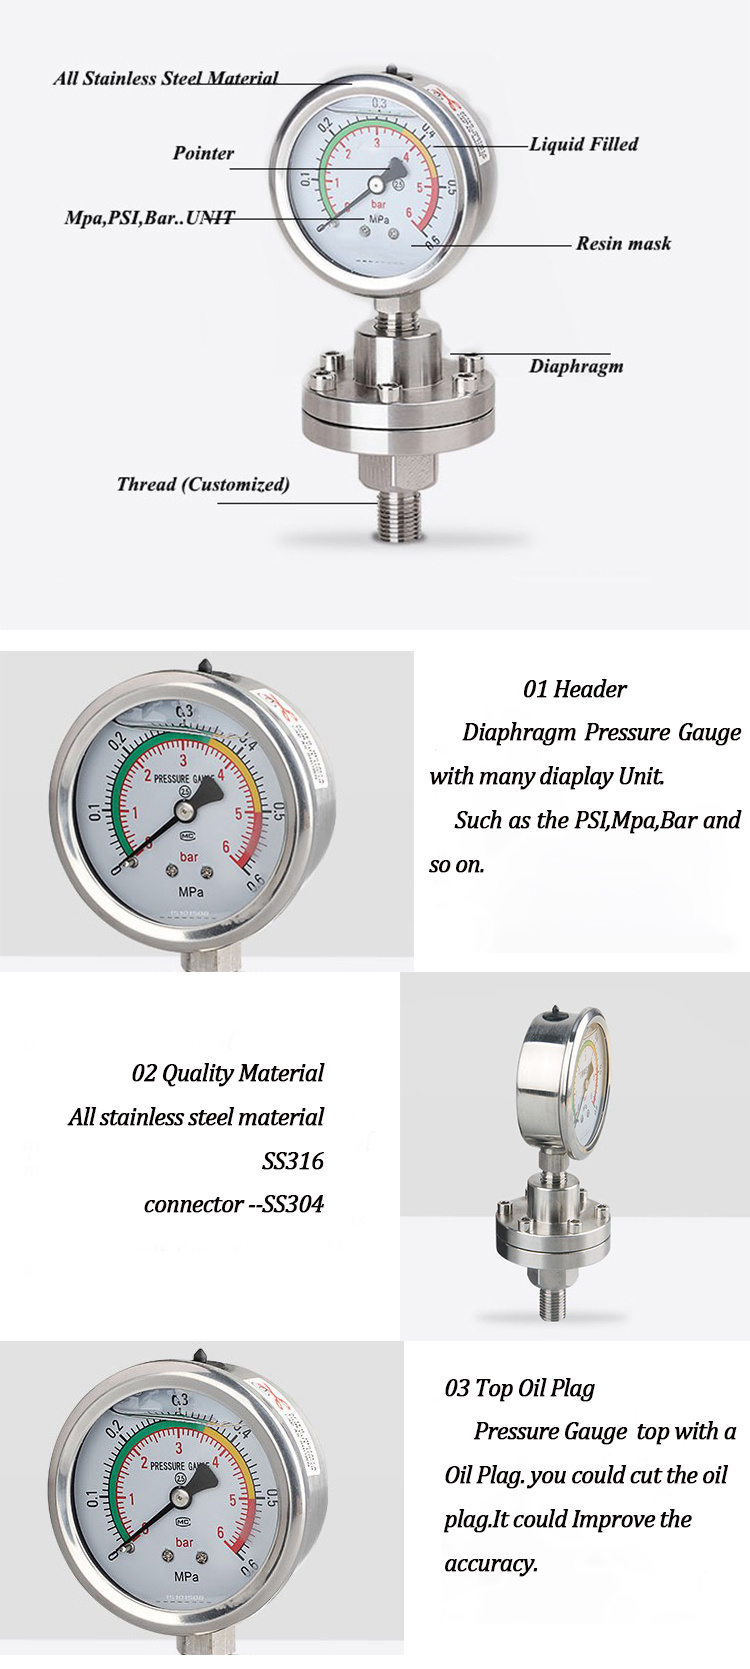 Cx-DPG-Rg-51 Digital Standard Manometer (CX-DPG-RG-51)